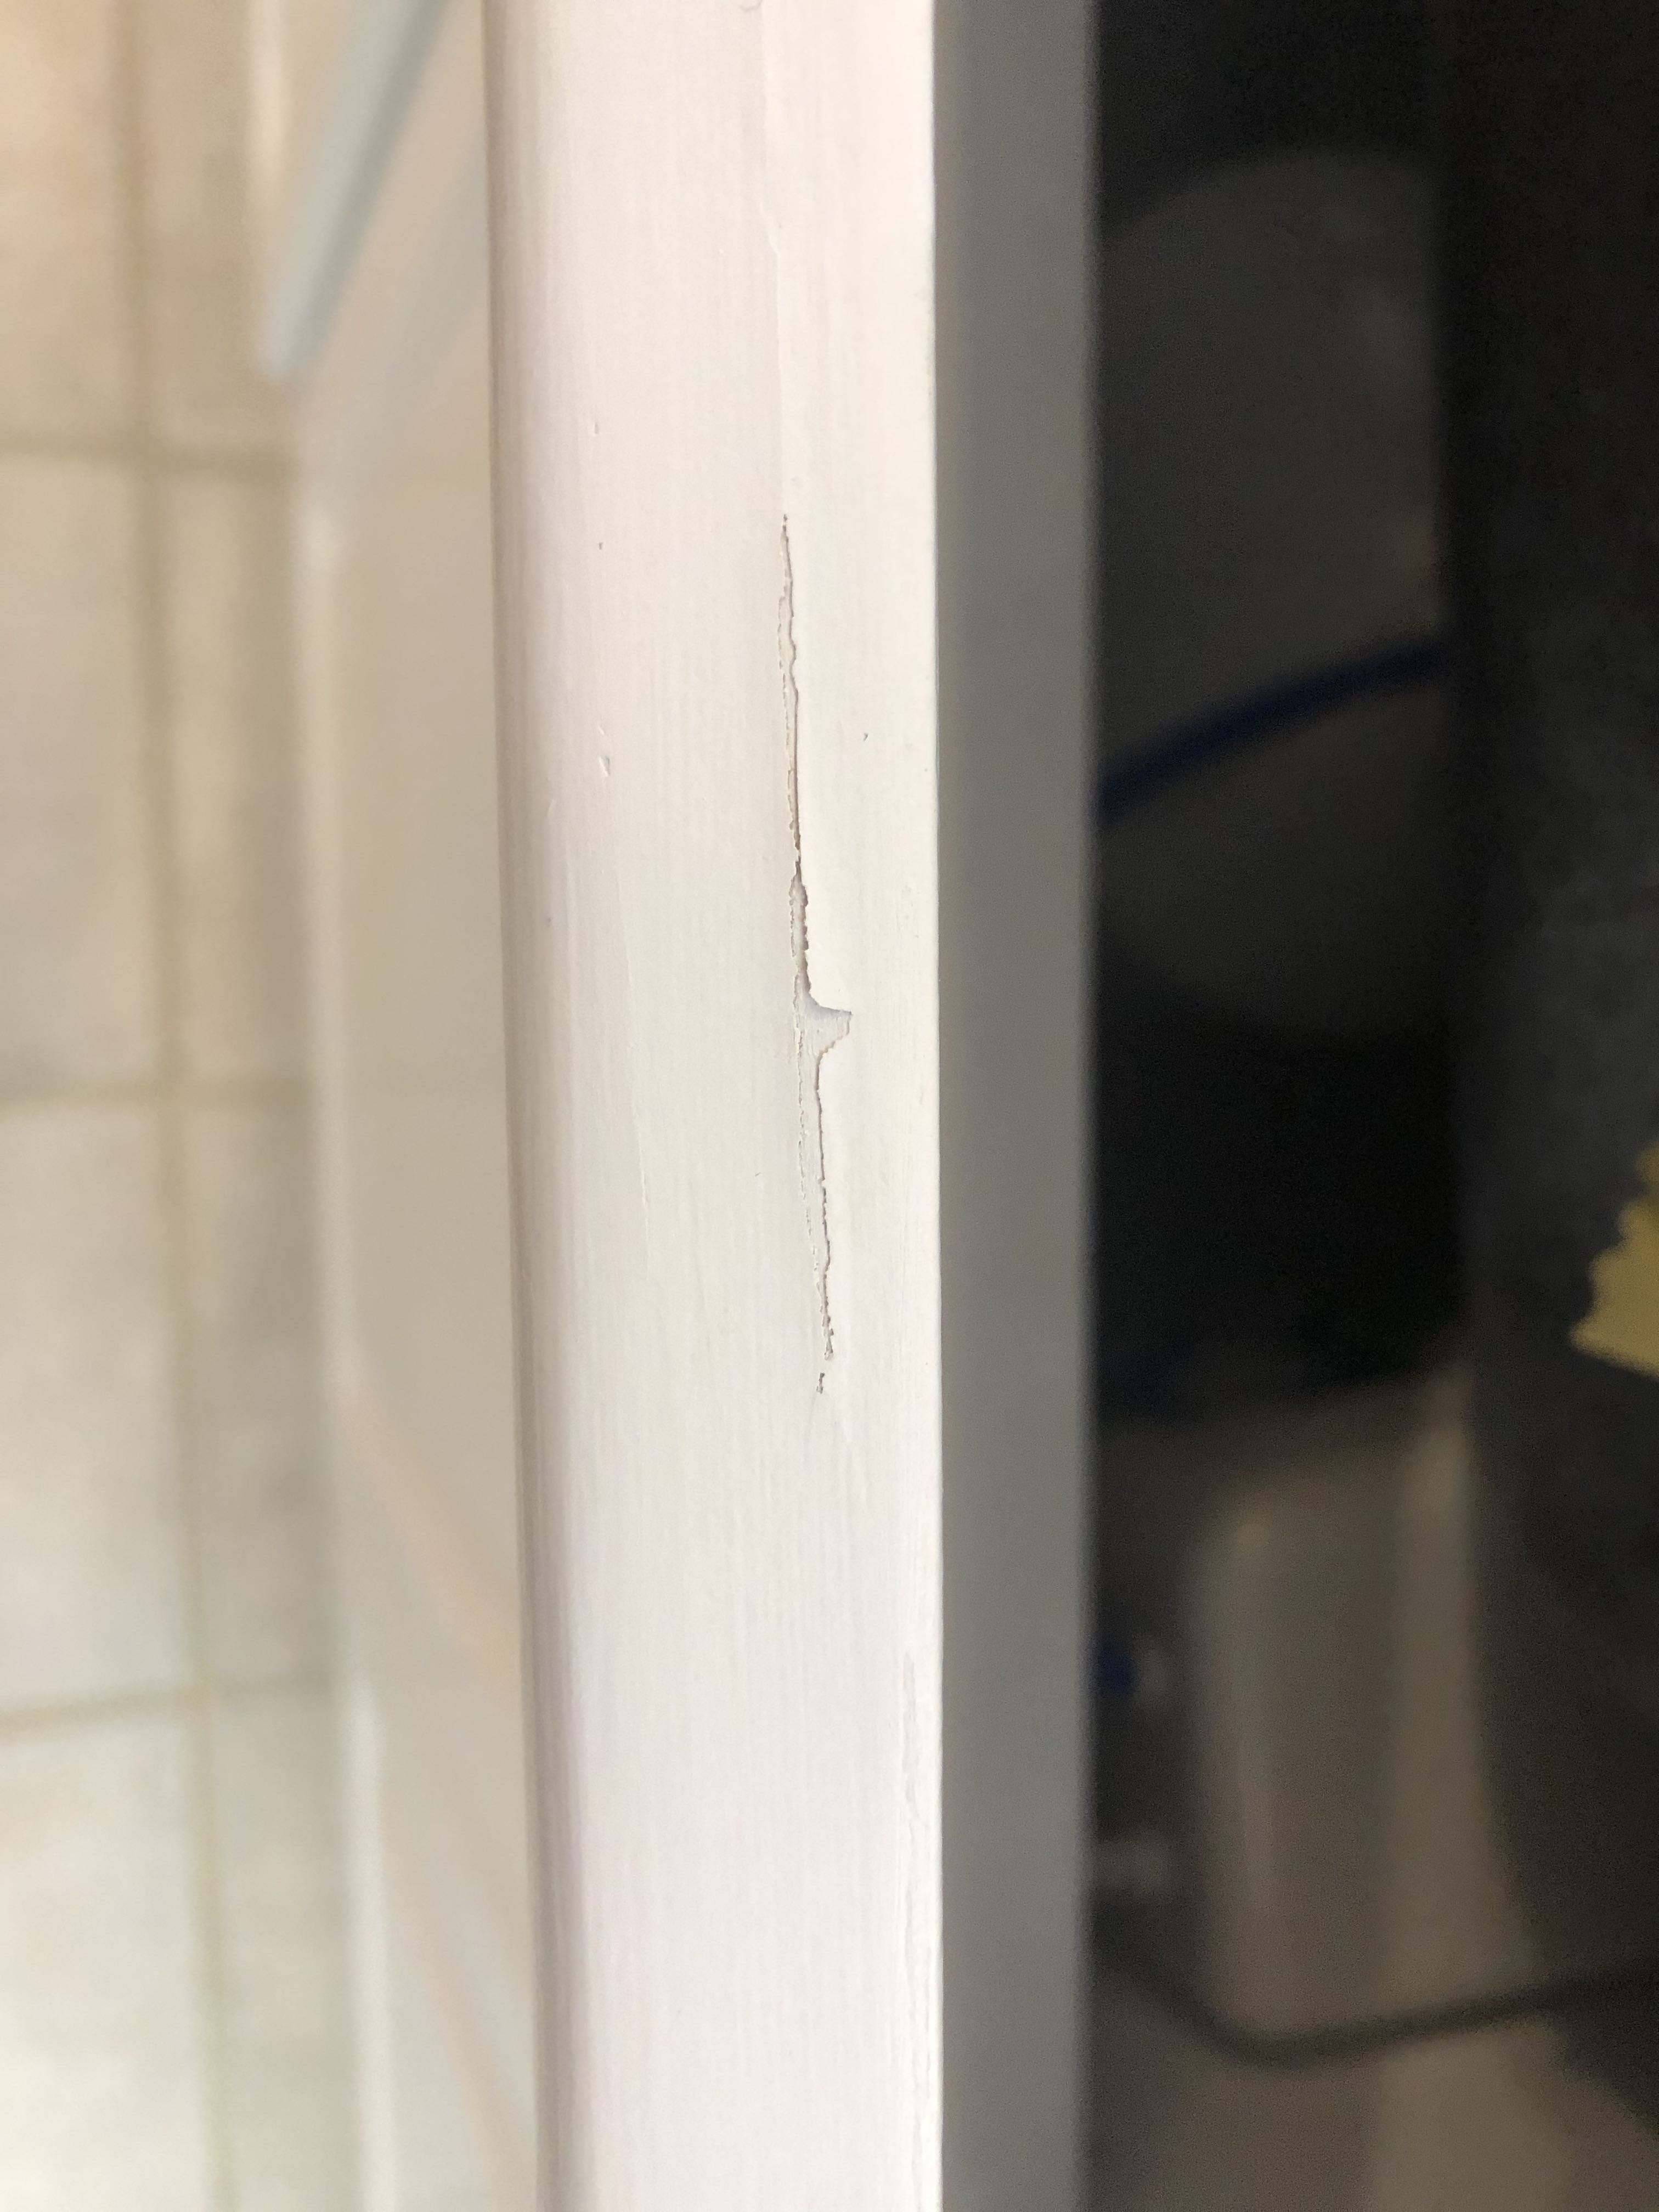 crack near sink